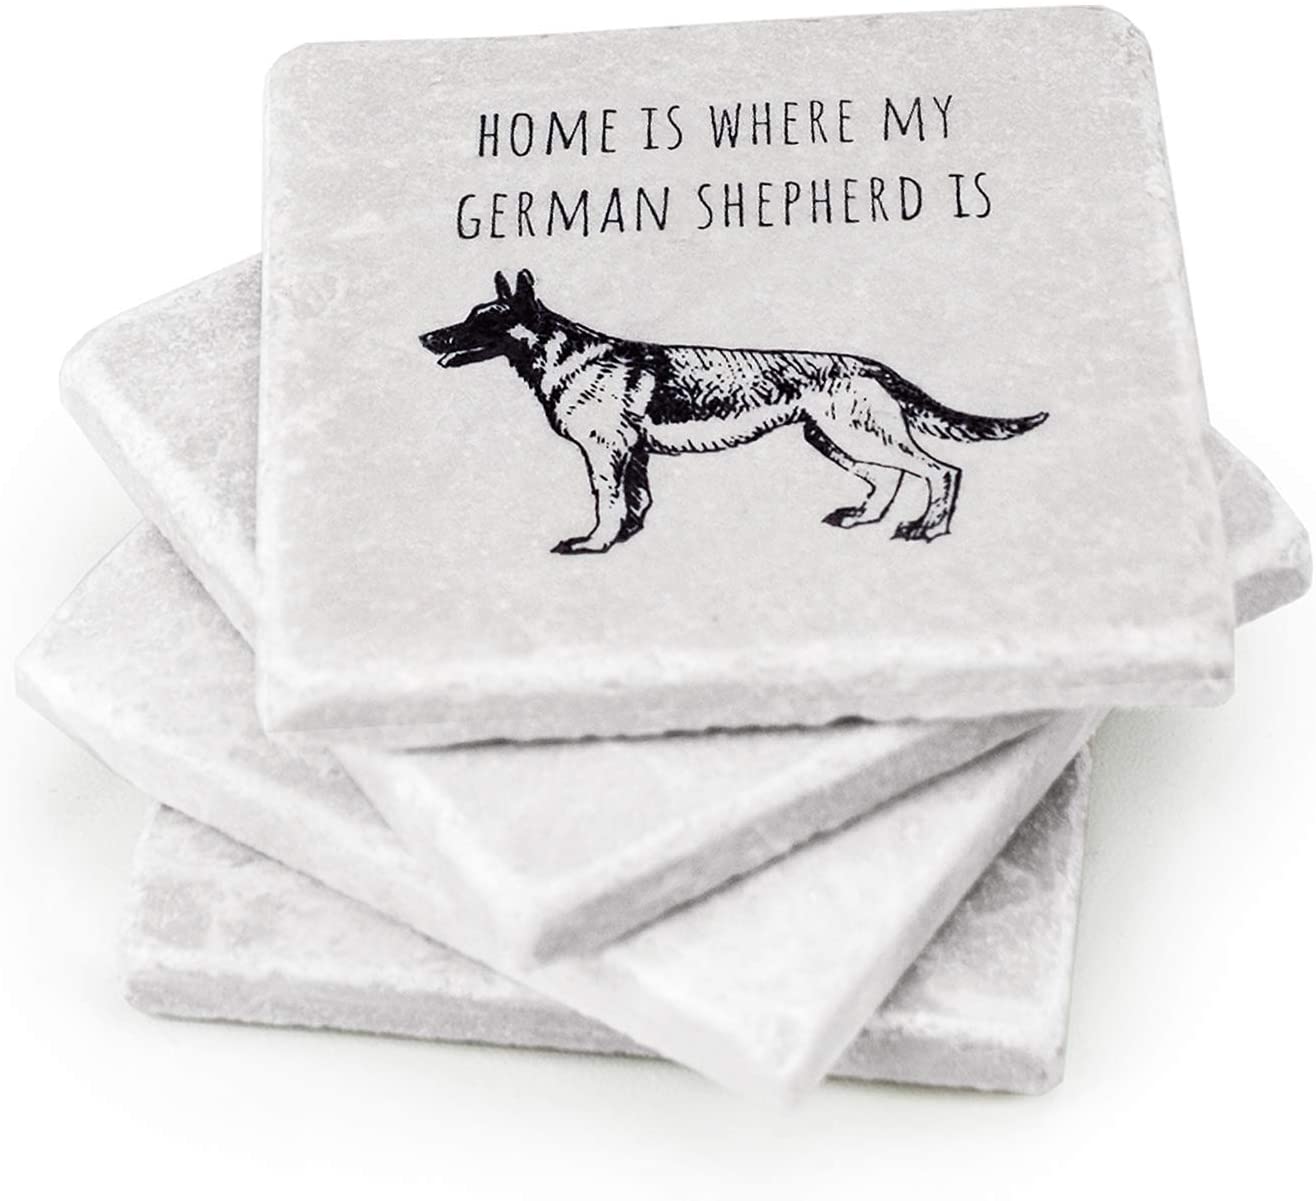 24 Best Gifts for German Shepherd Lovers